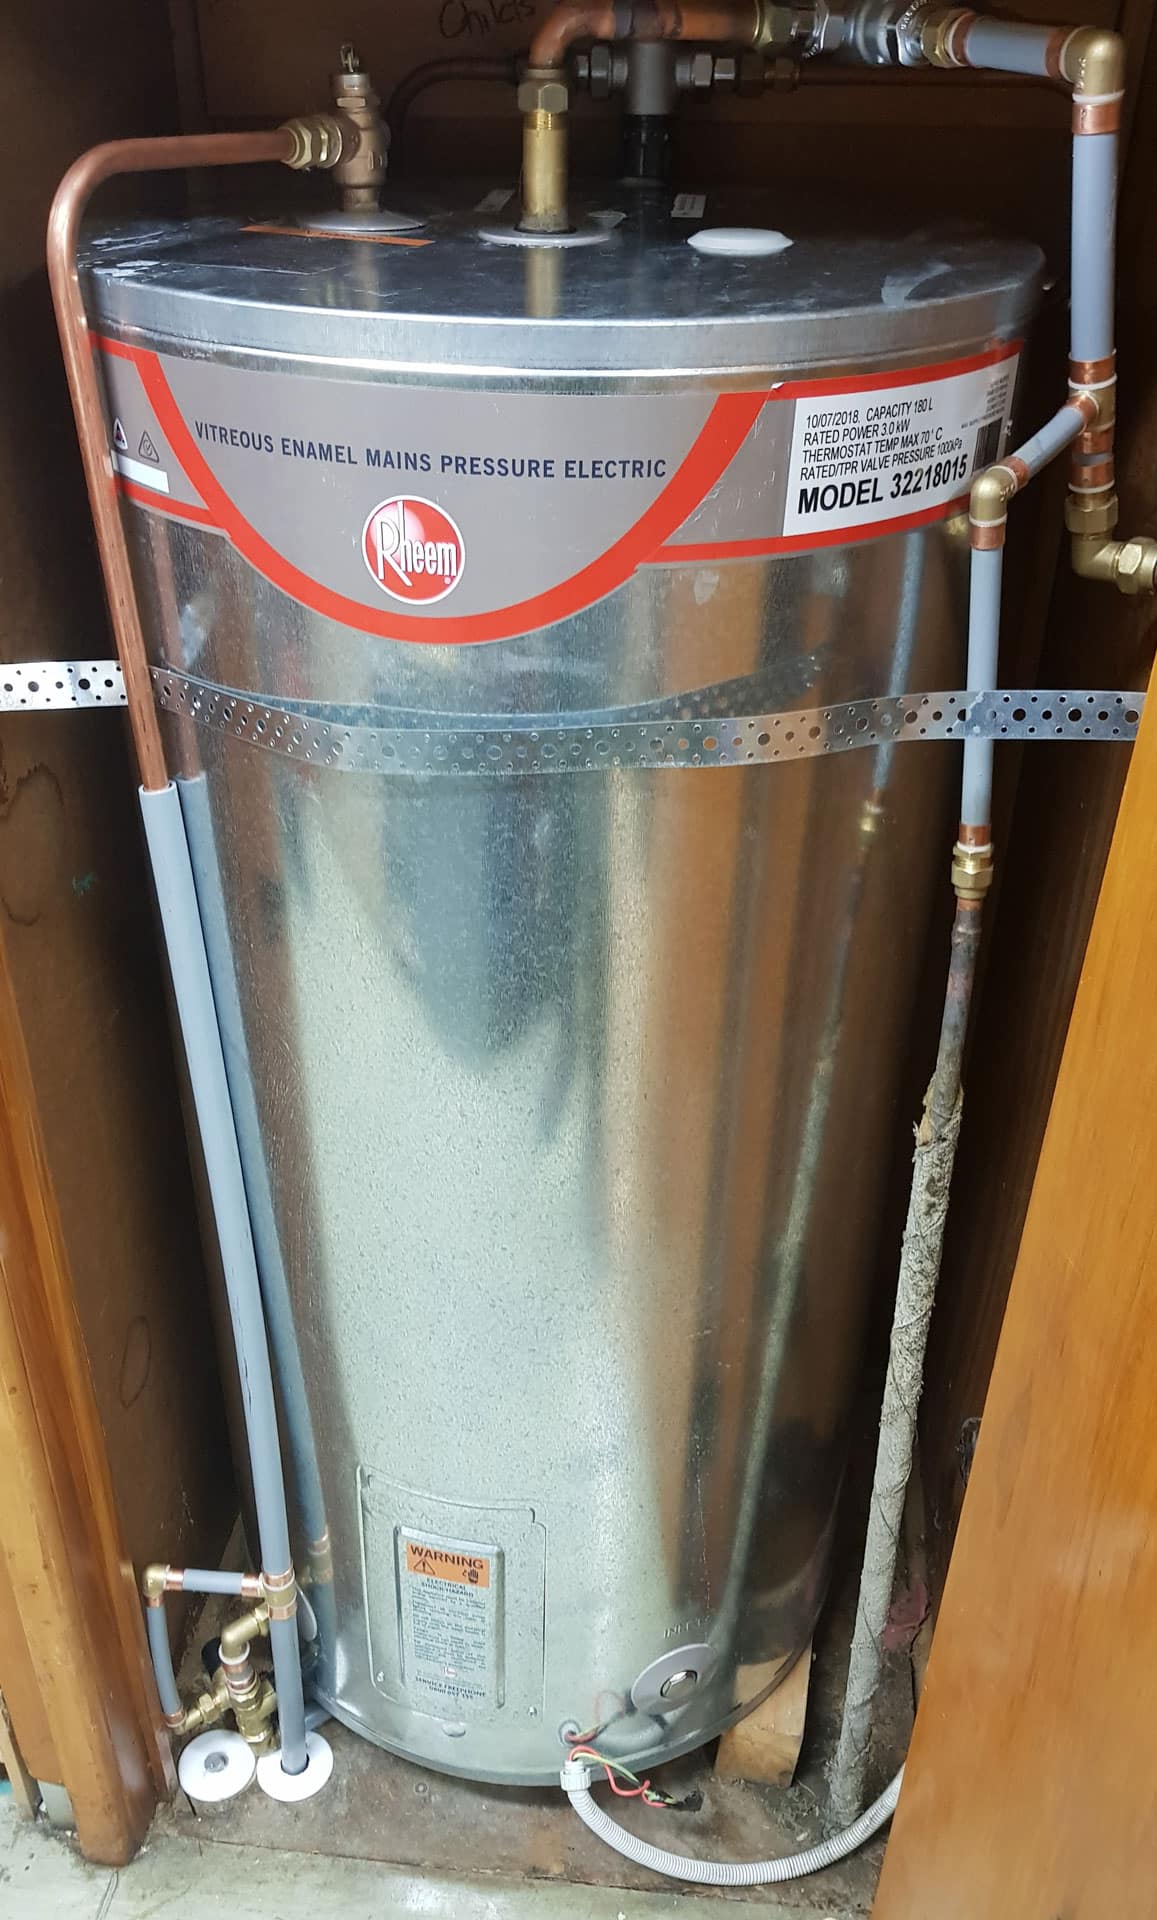 Cape Plumbing Hot Water Cylinder Enamel Mains Pressure Electric